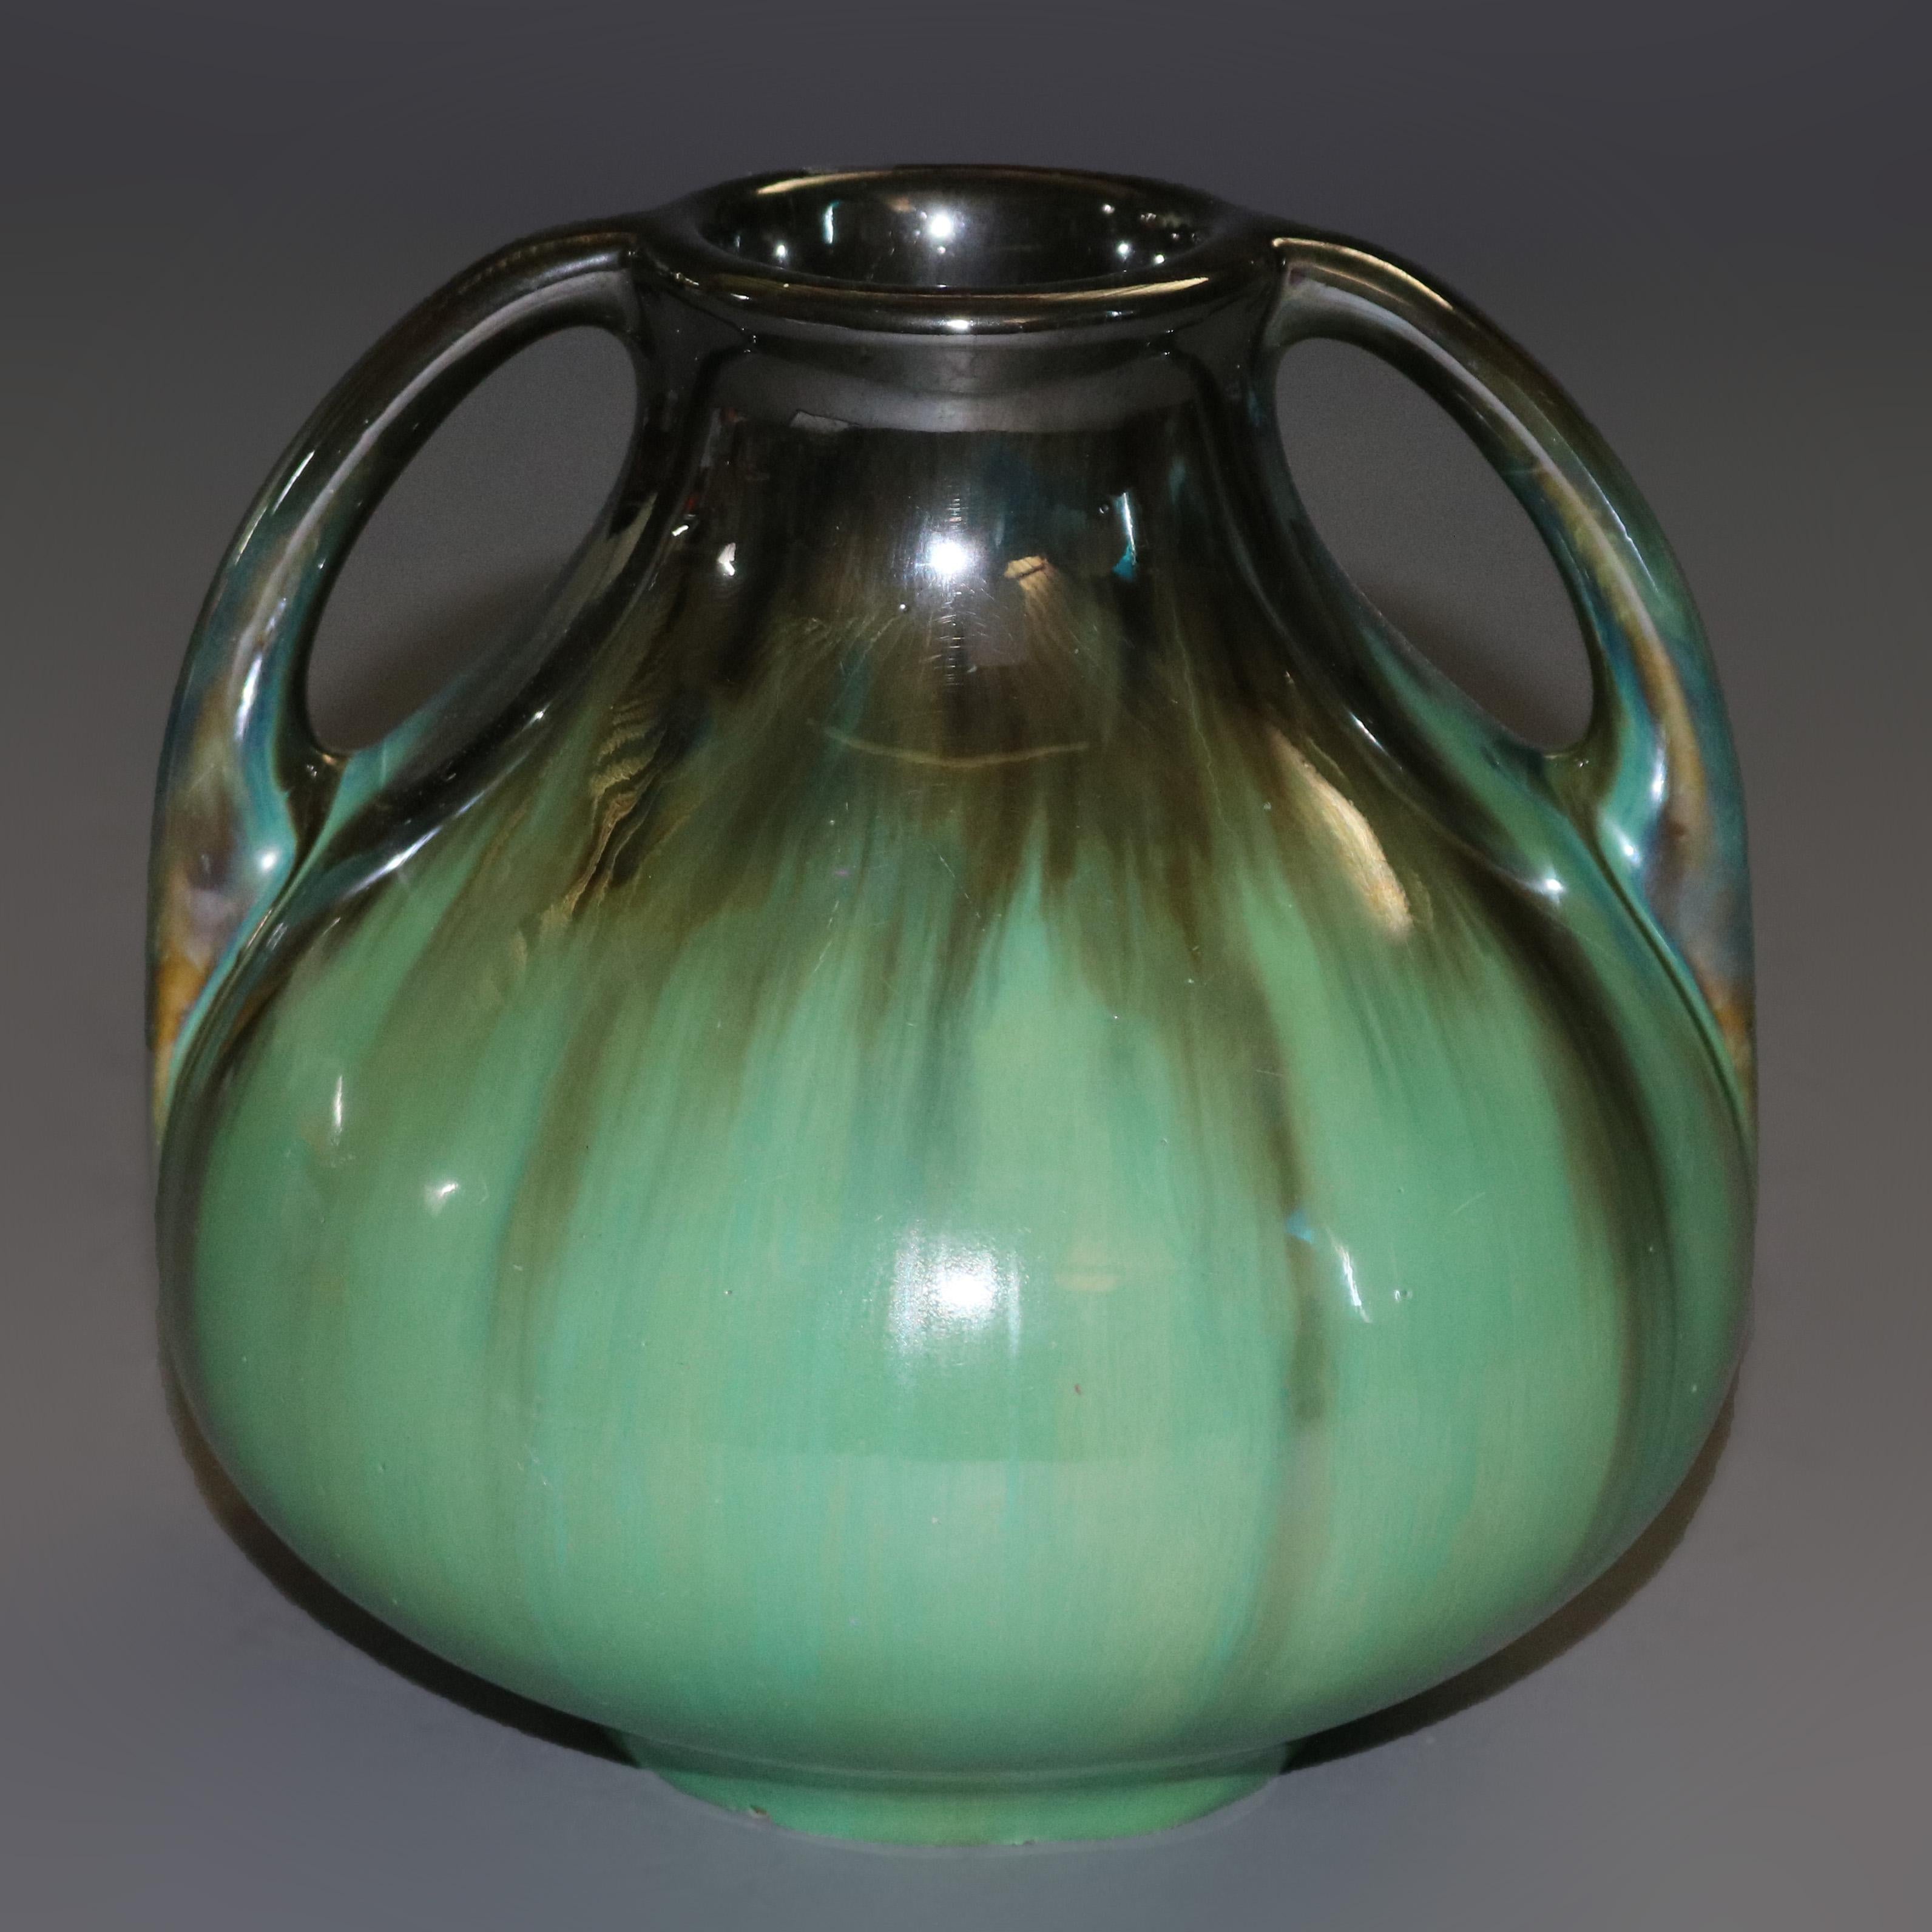 American Vintage Art Pottery Mirrored Glaze Gourd Form Vase by Fulper, 20th Century